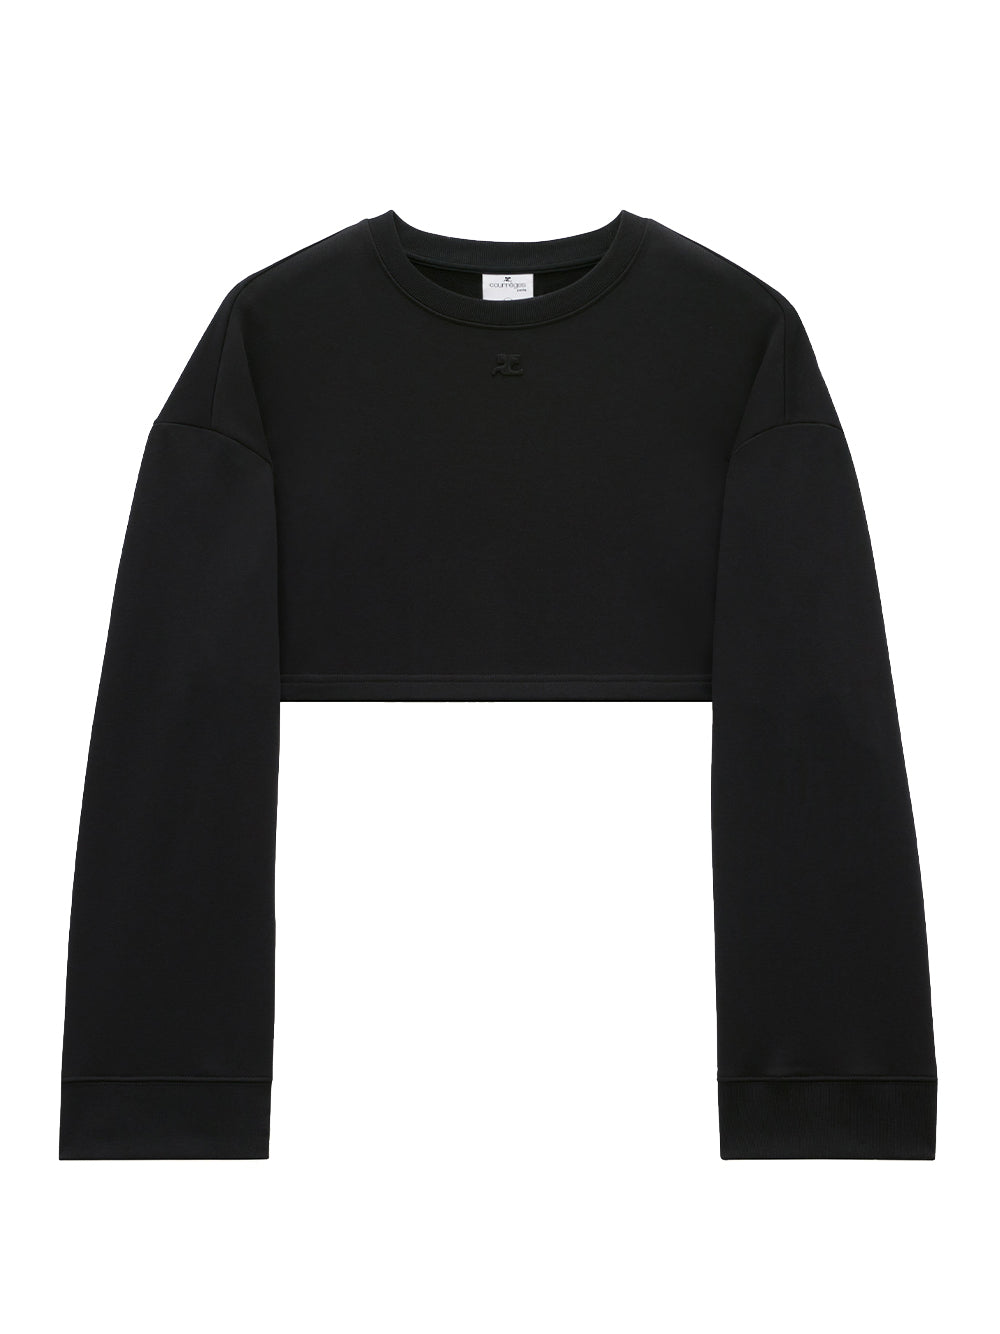 Cocoon Fleece Cropped Sweater (Black)